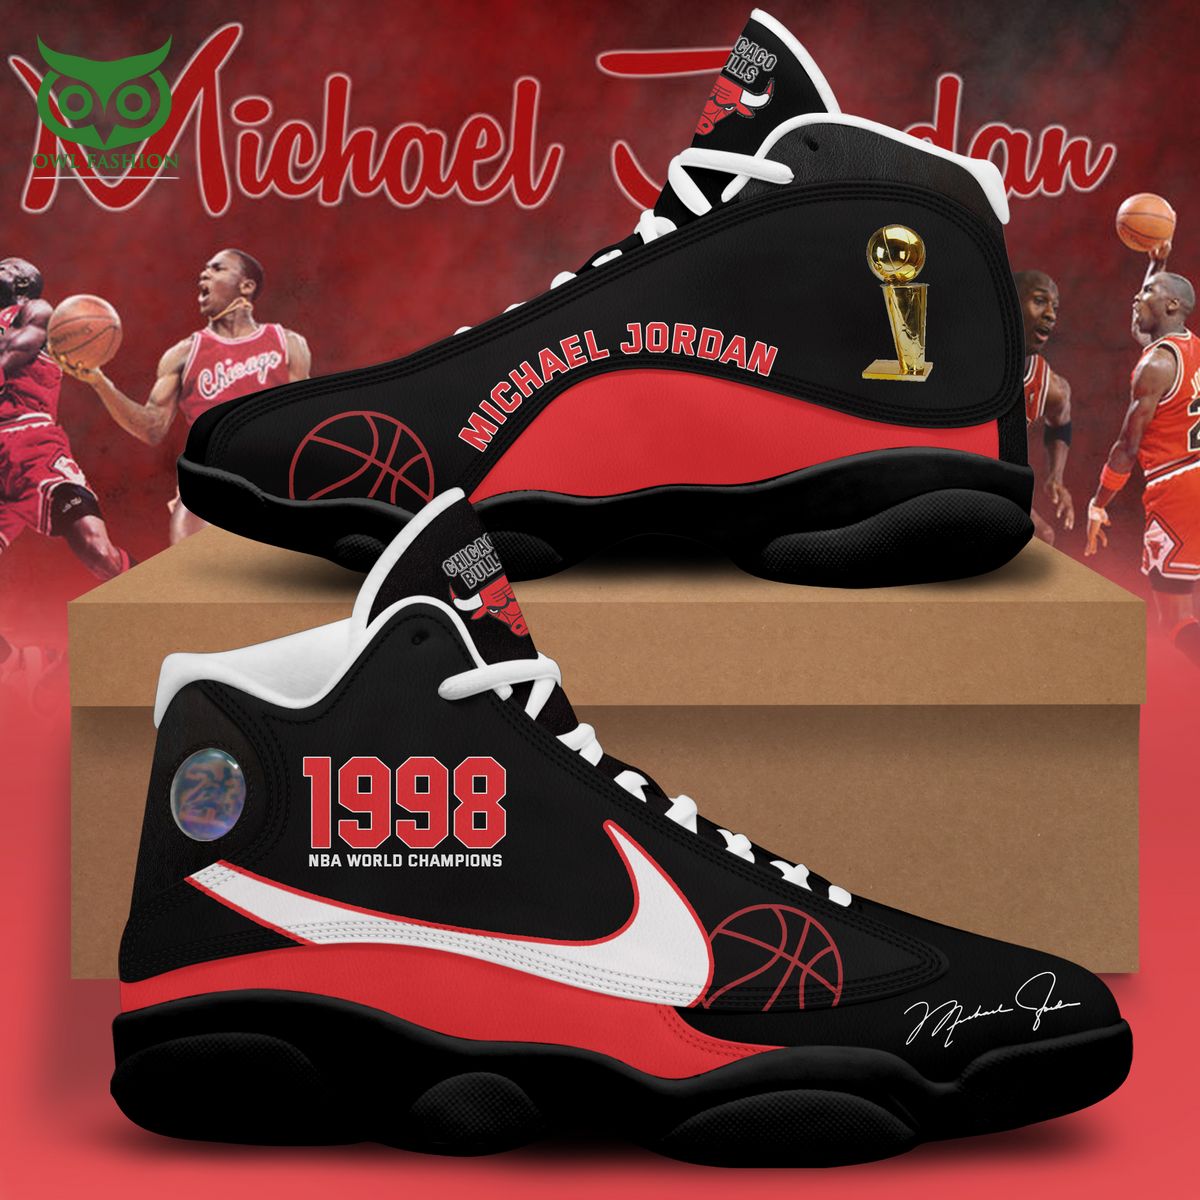 Nfl Washington Football Team Air Jordan 13 Shoes For Fans